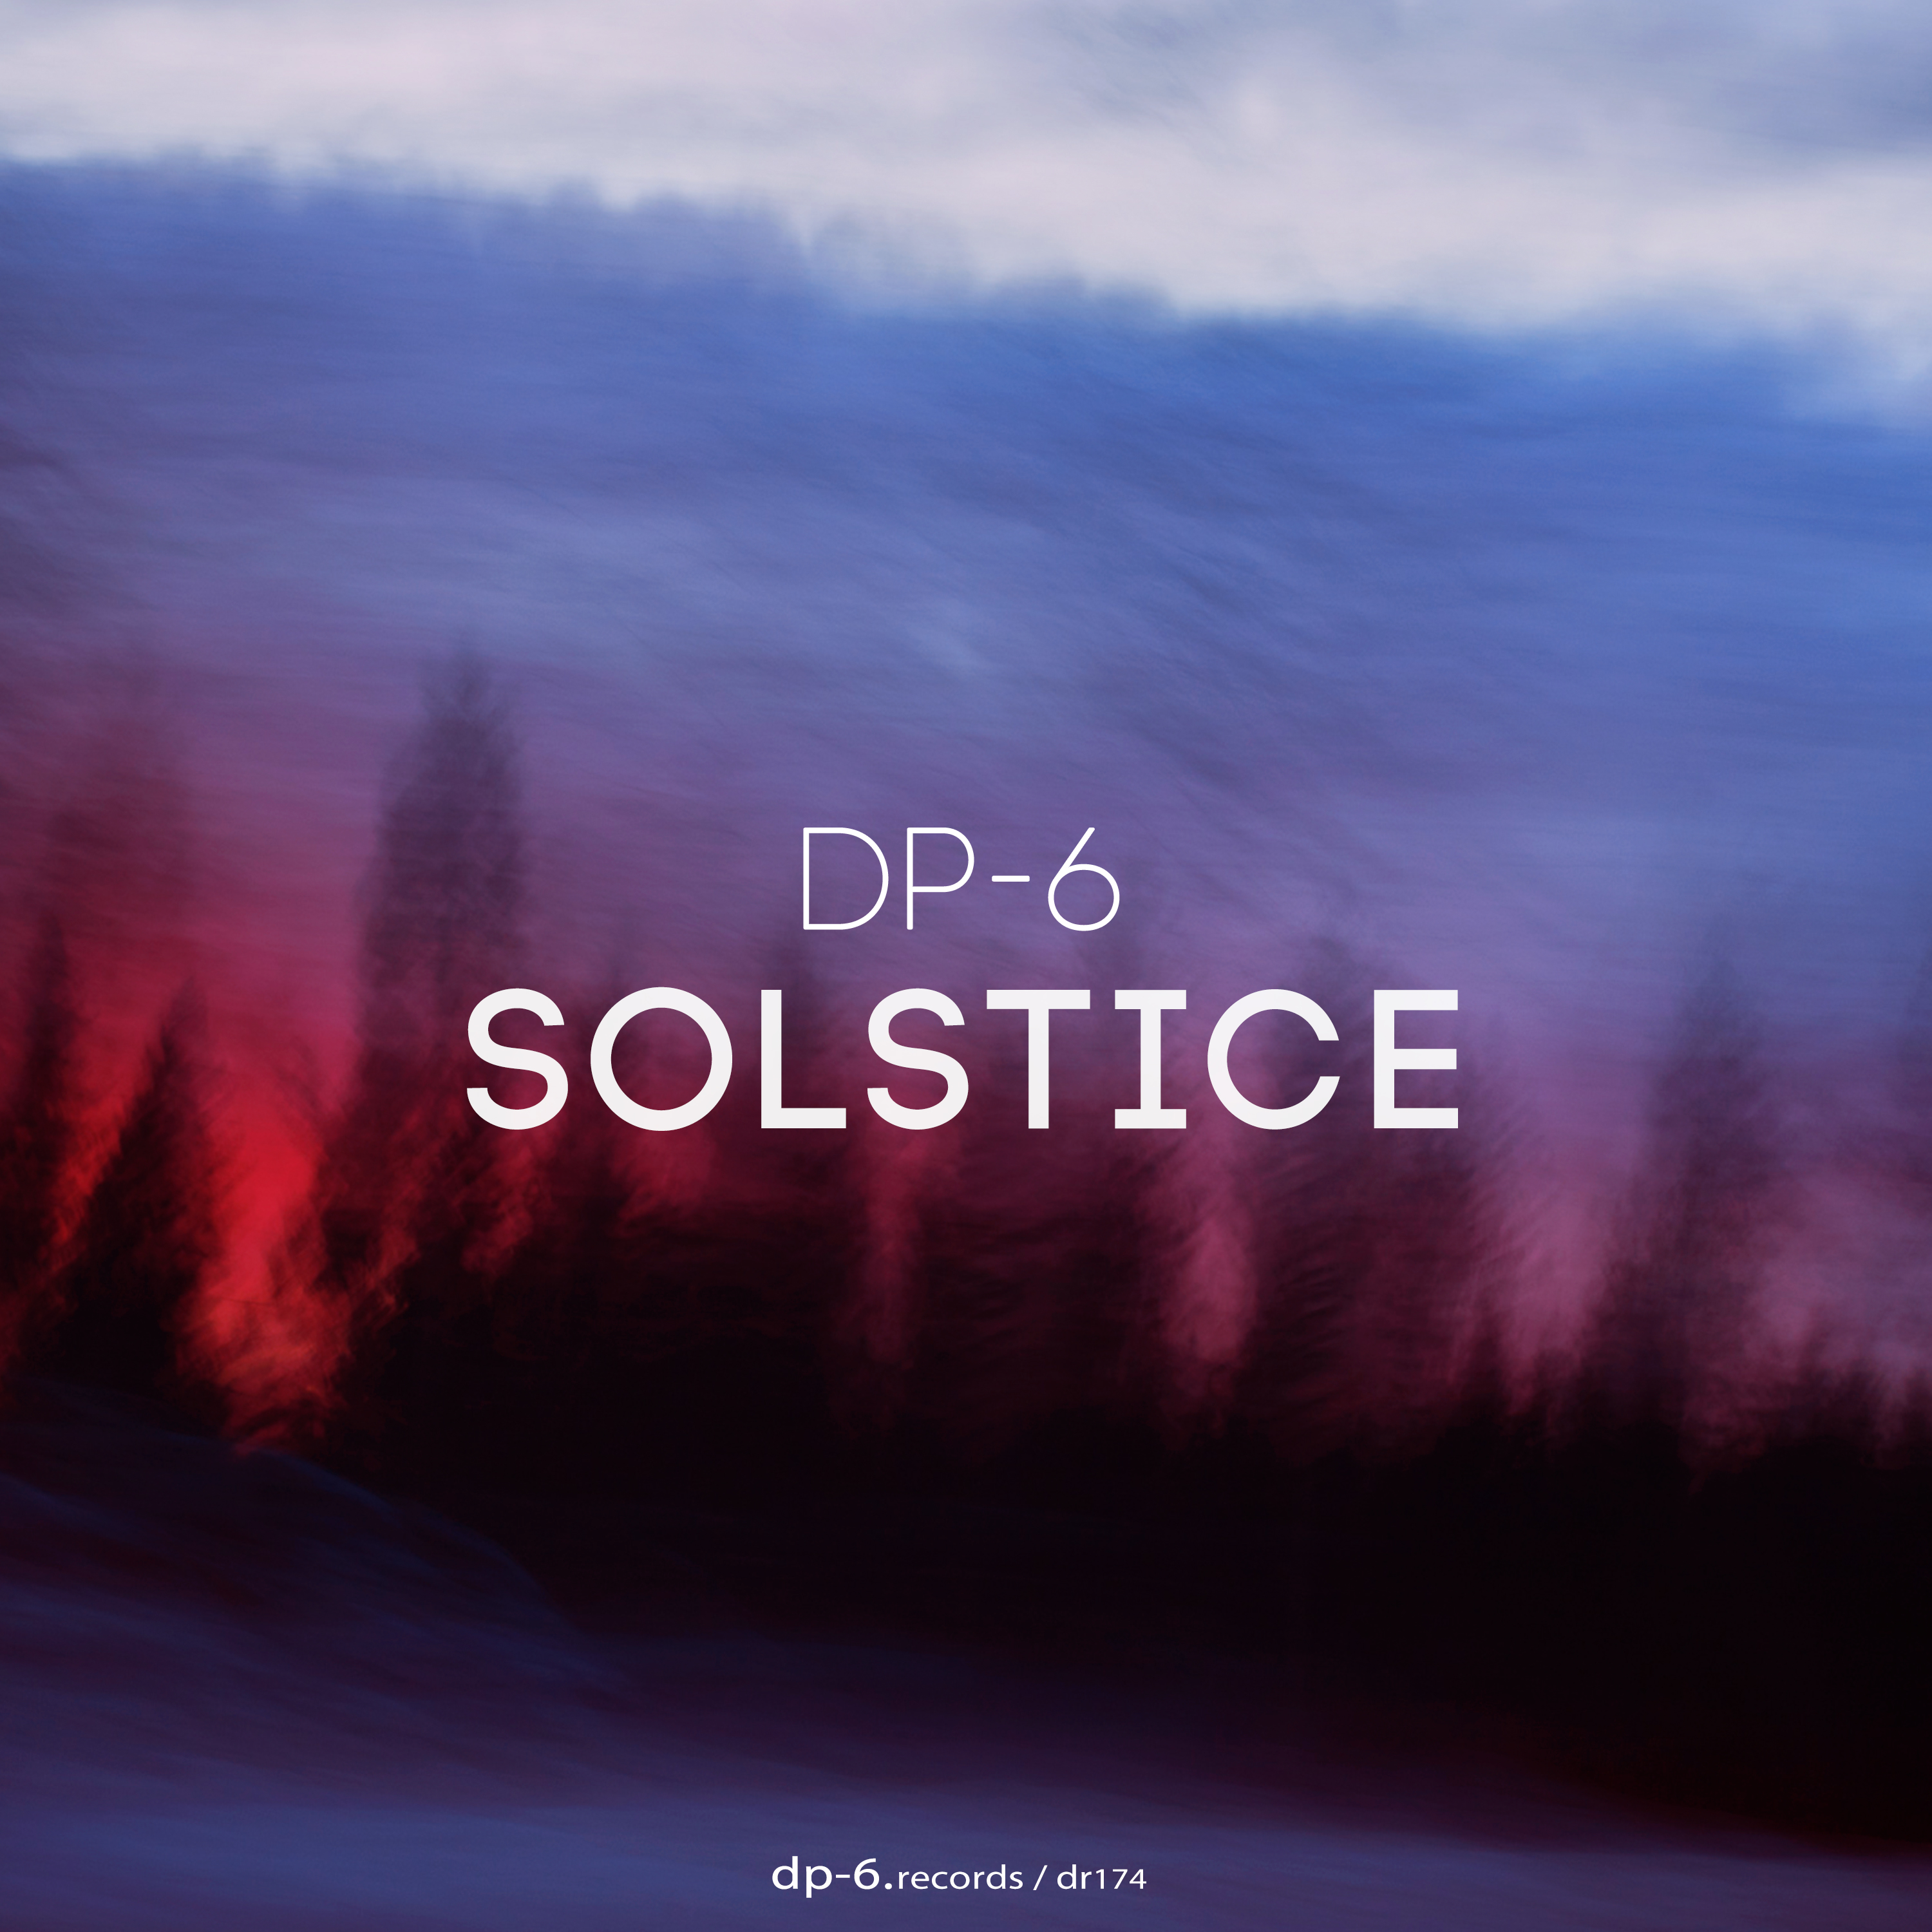 DP-6: Solstice